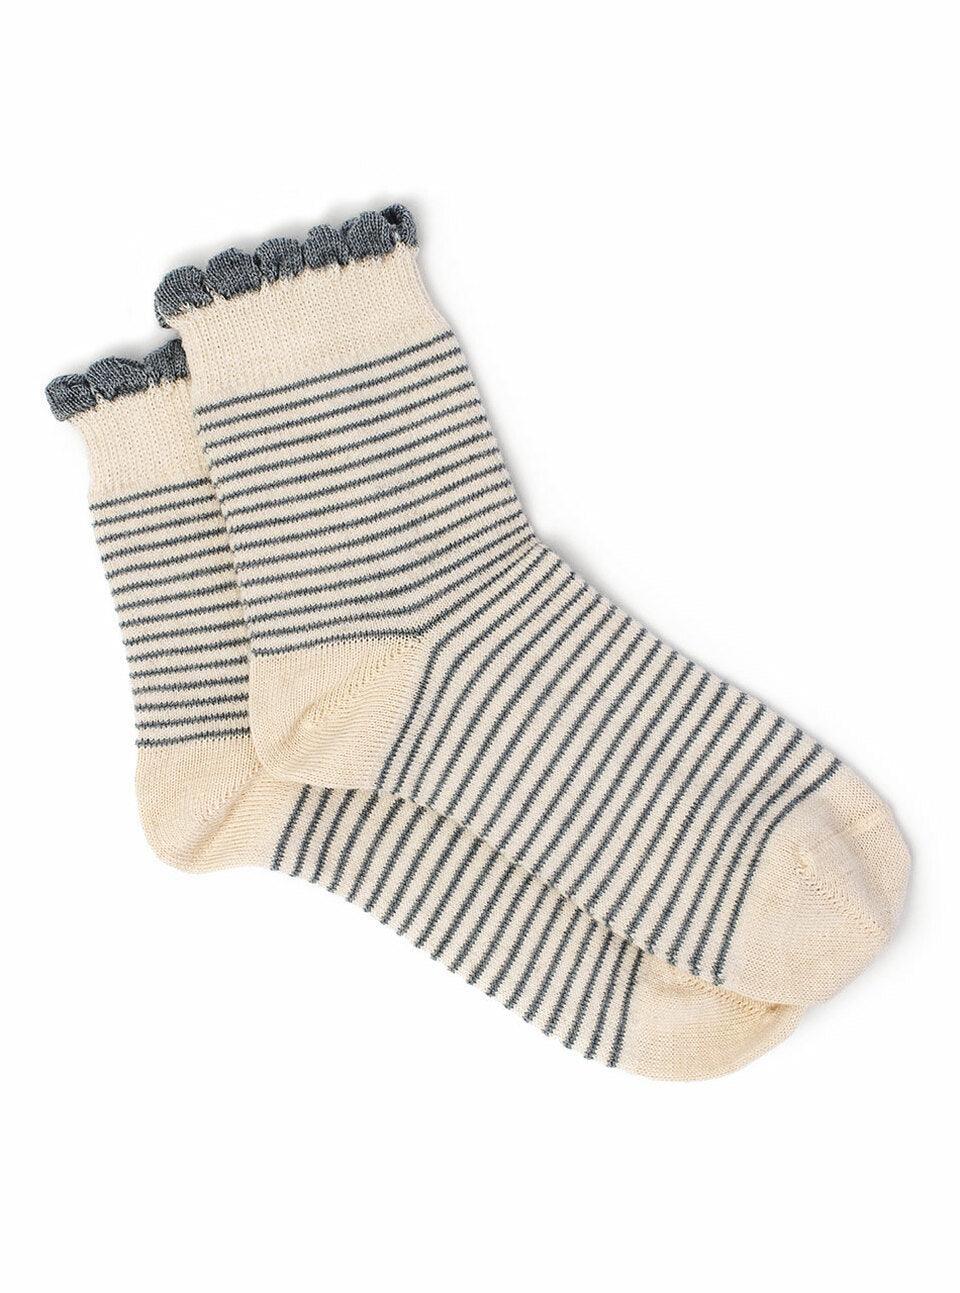 Breton Striped - Baby Alpaca & Bamboo Bootie / Dress Socks - Warrior Alpaca - The Sock Monster